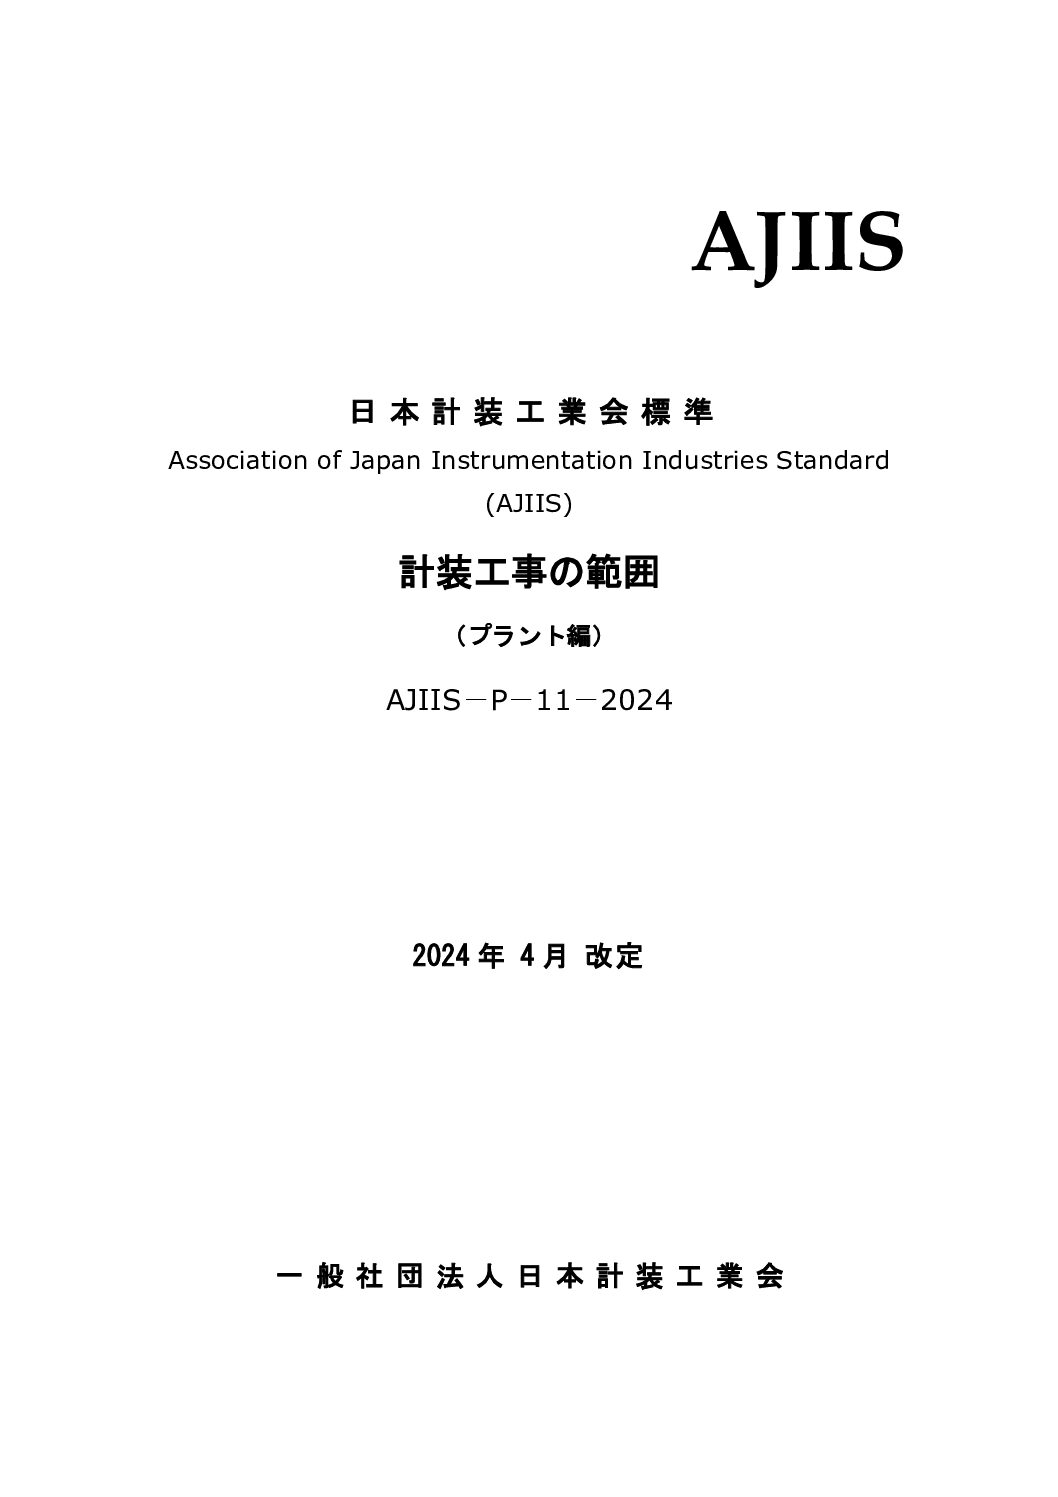 AJIIS-P-11-2024